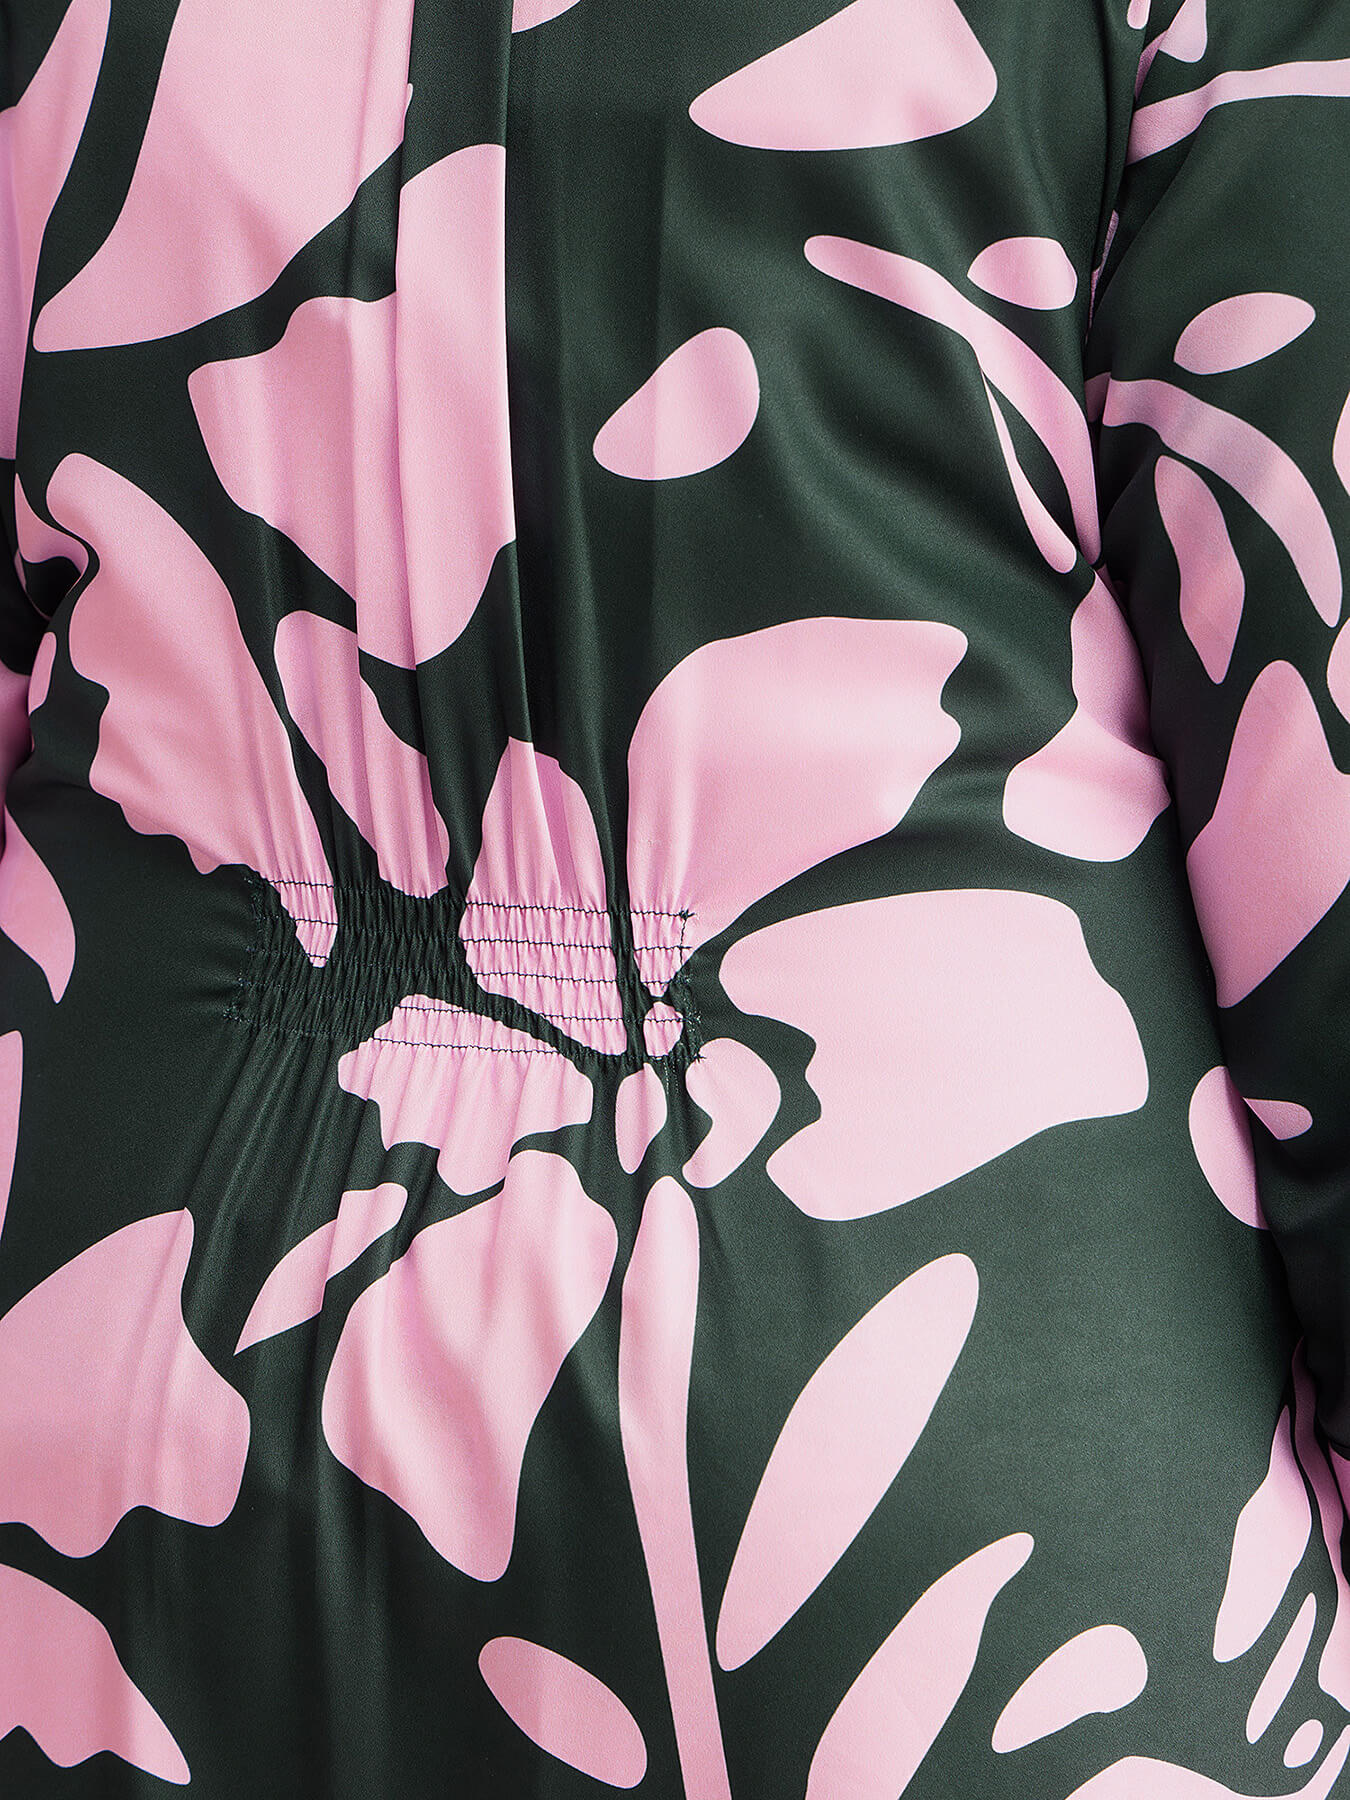 Floral Print Shirt Dress - Pink And Green